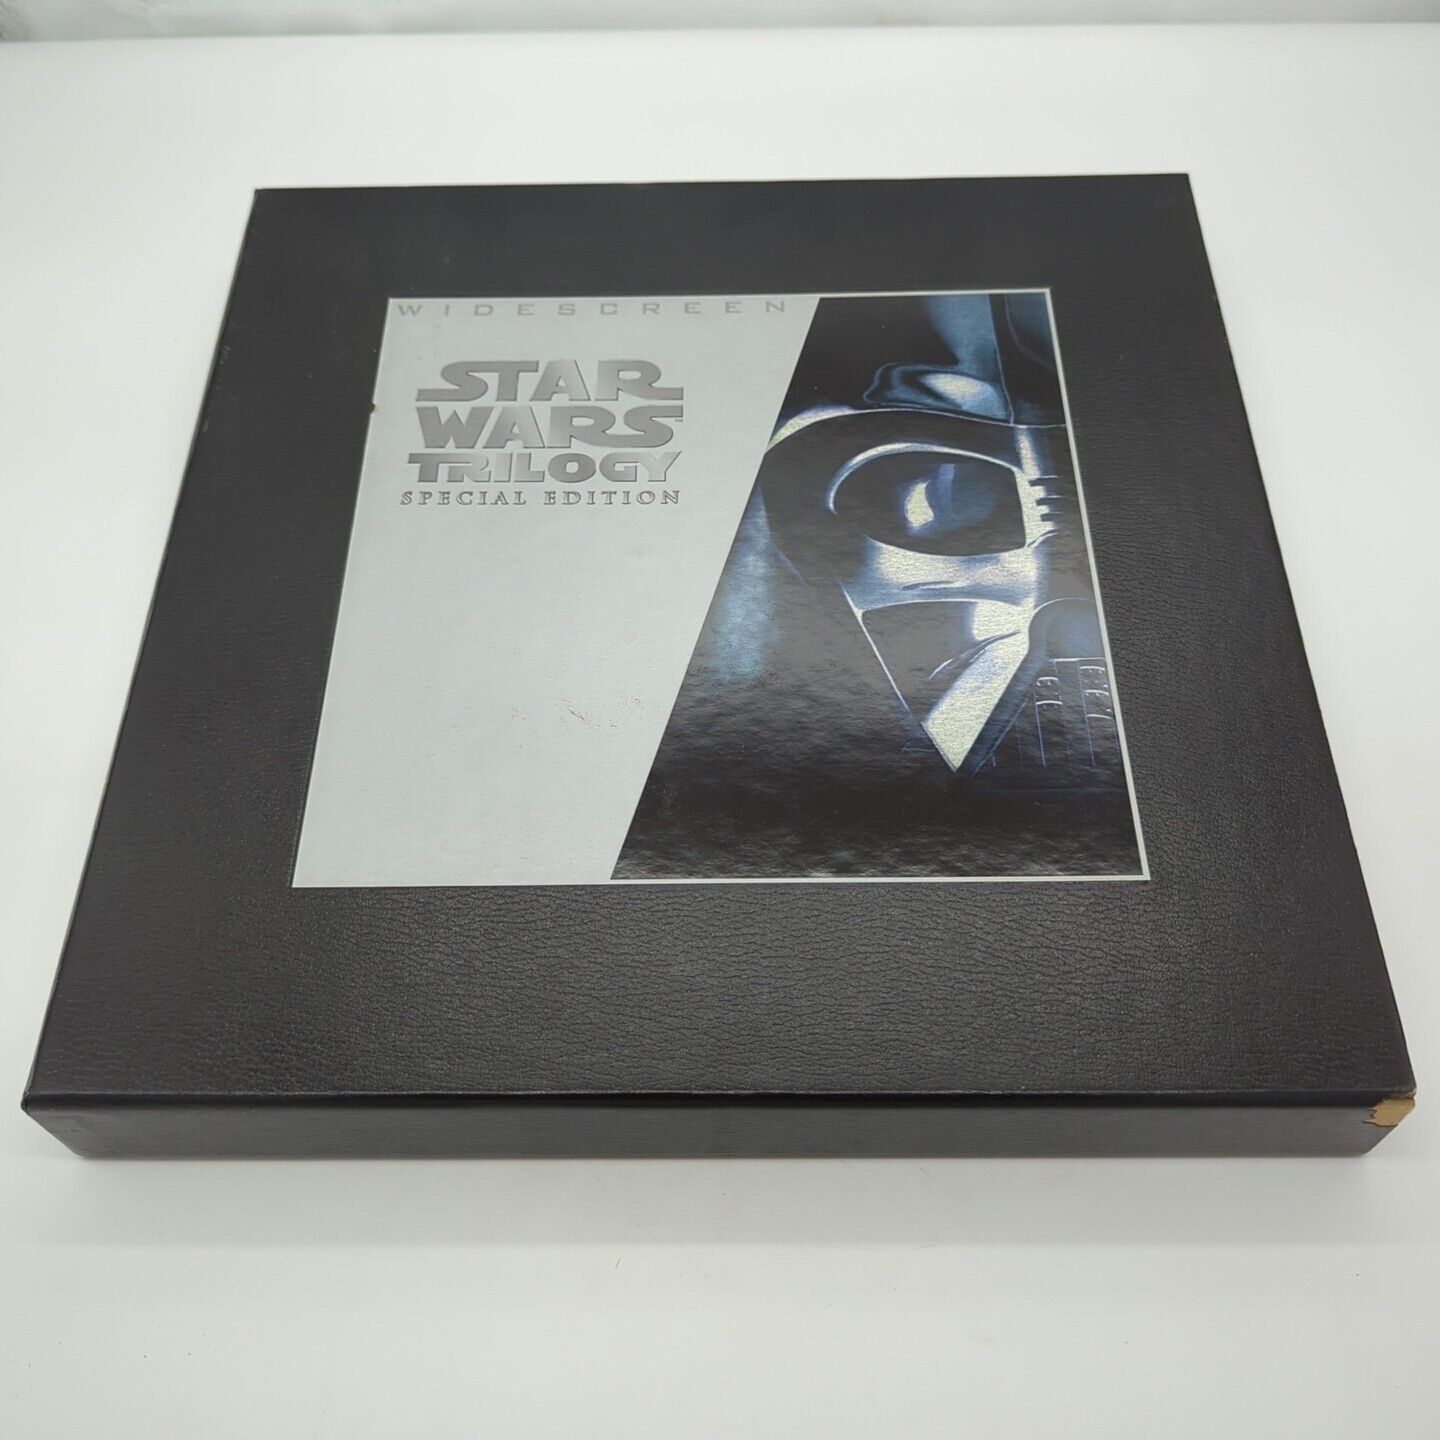 Star Wars Trilogy (Laserdisc, 1997, Special Edition)